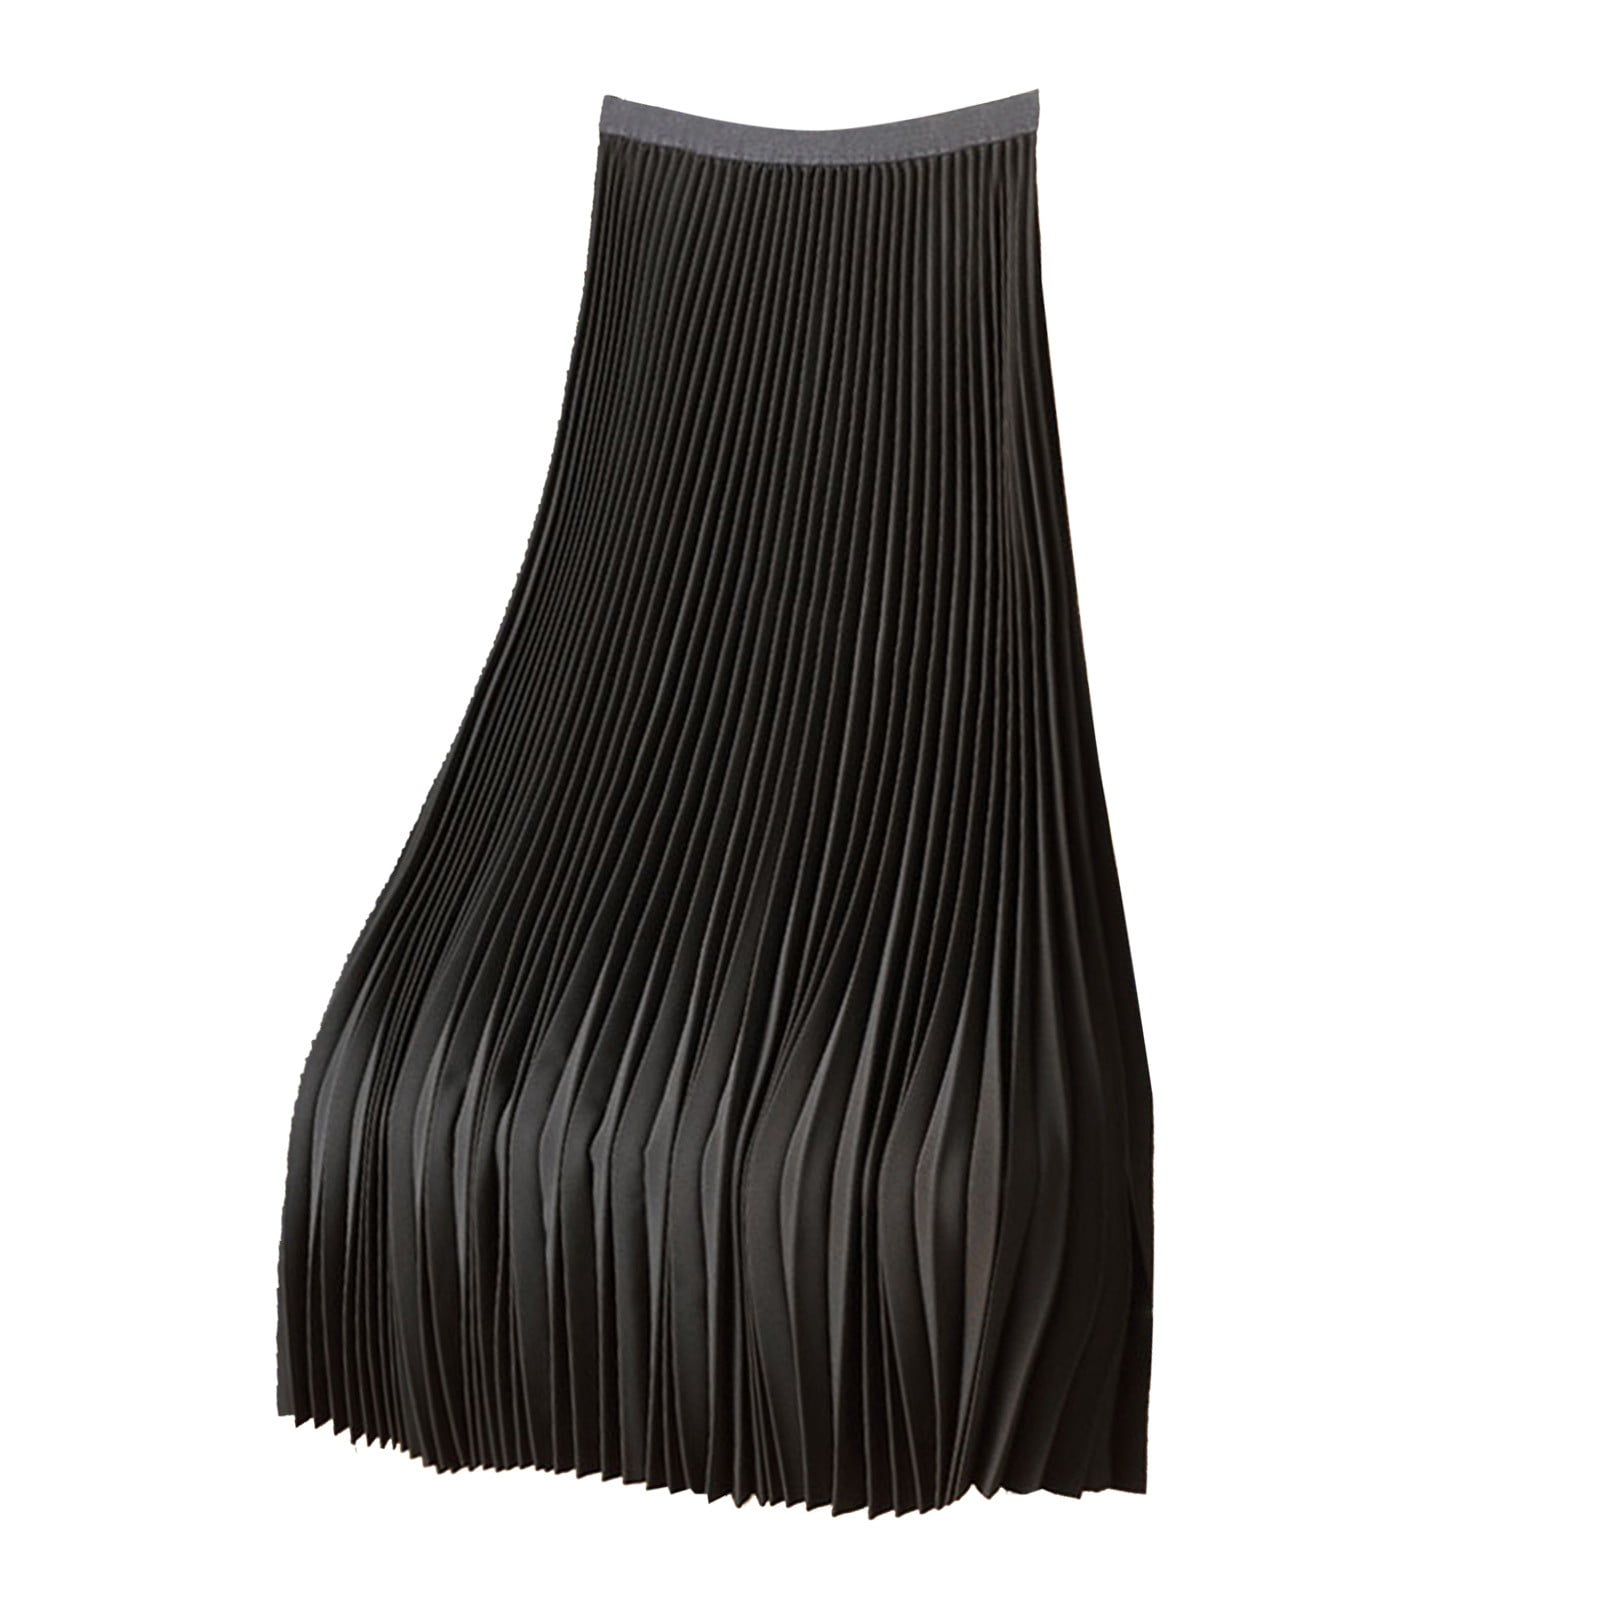 WEAIXIMIUNG Black Mini Skirt High Waisted Stretchy Solid Color Satin ...